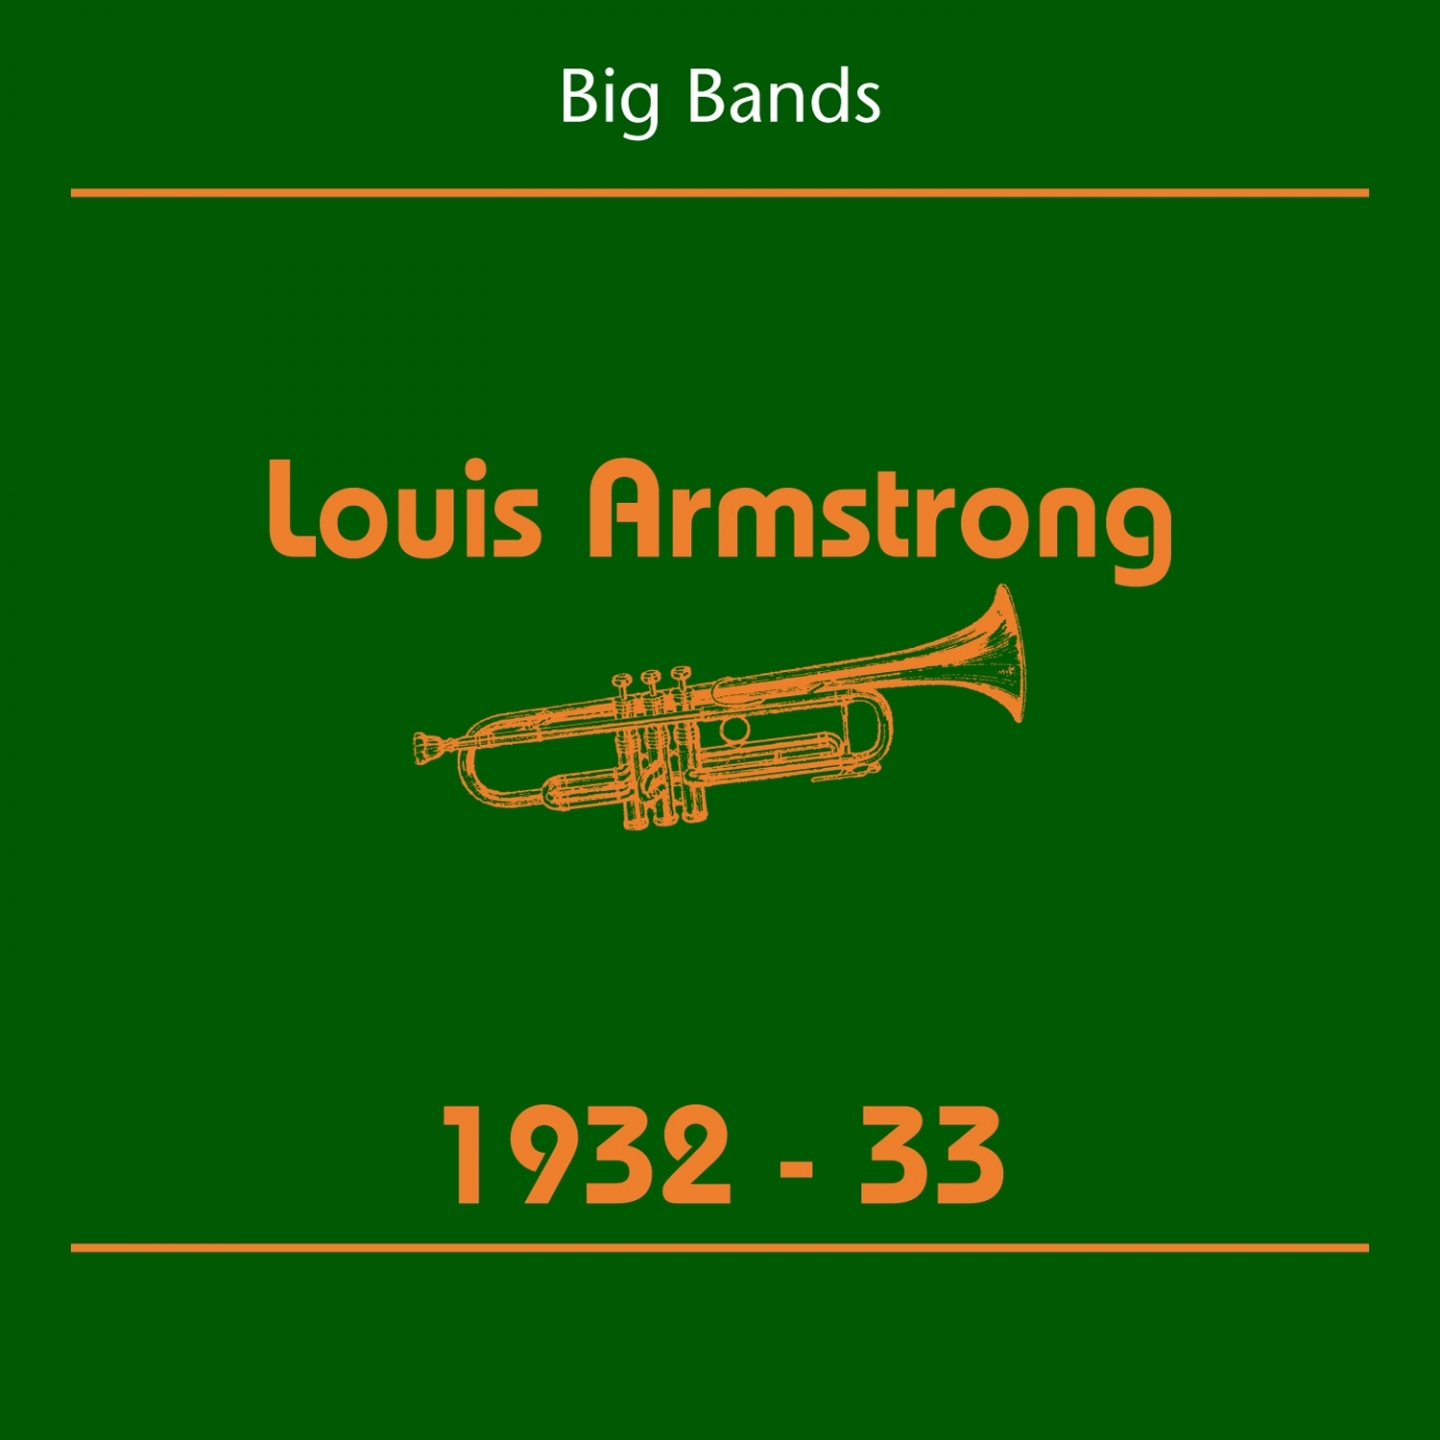 Big Bands (Louis Armstrong 1932-33)